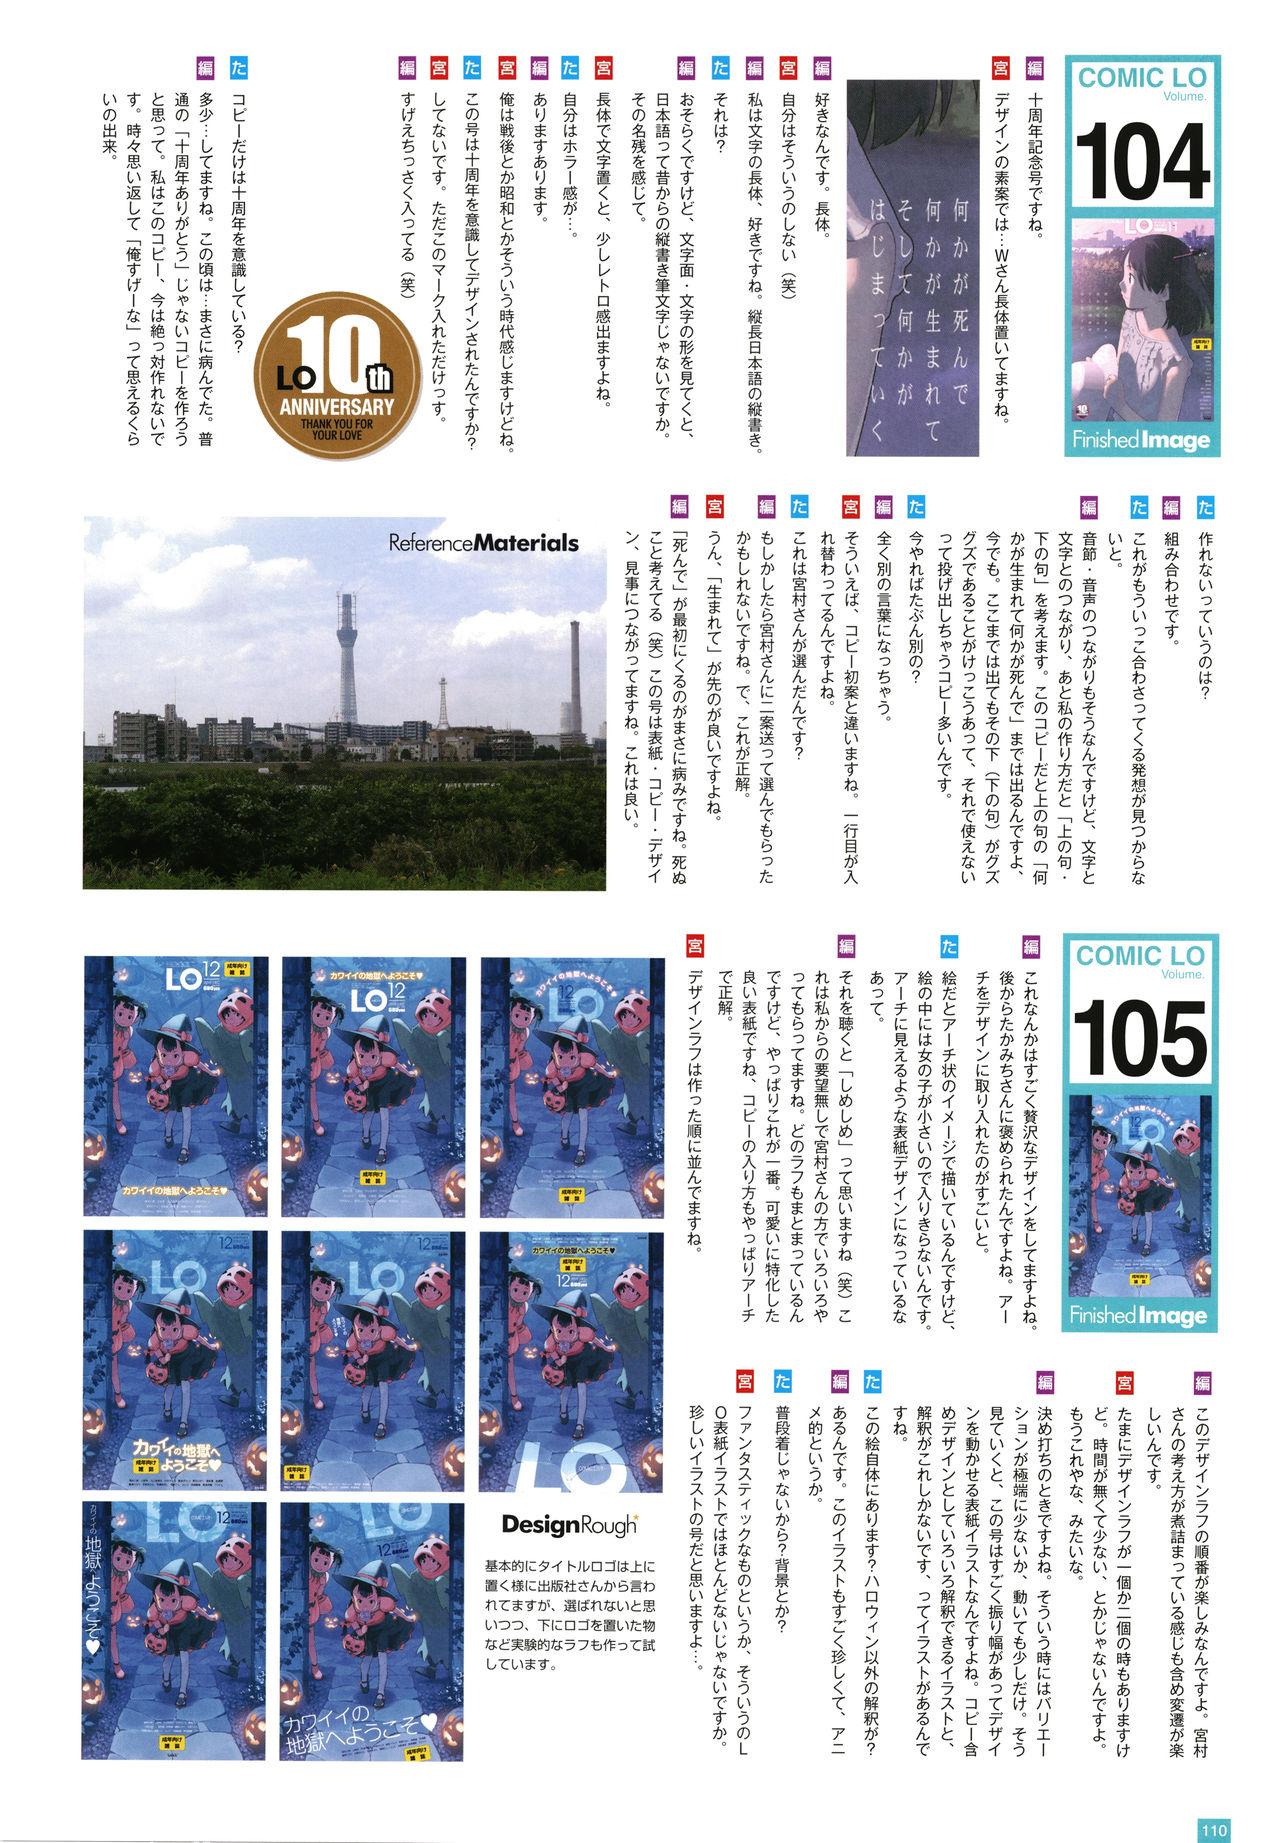 [Takamichi] LO Artbook 2-B TAKAMICHI LO-fi WORKS 112